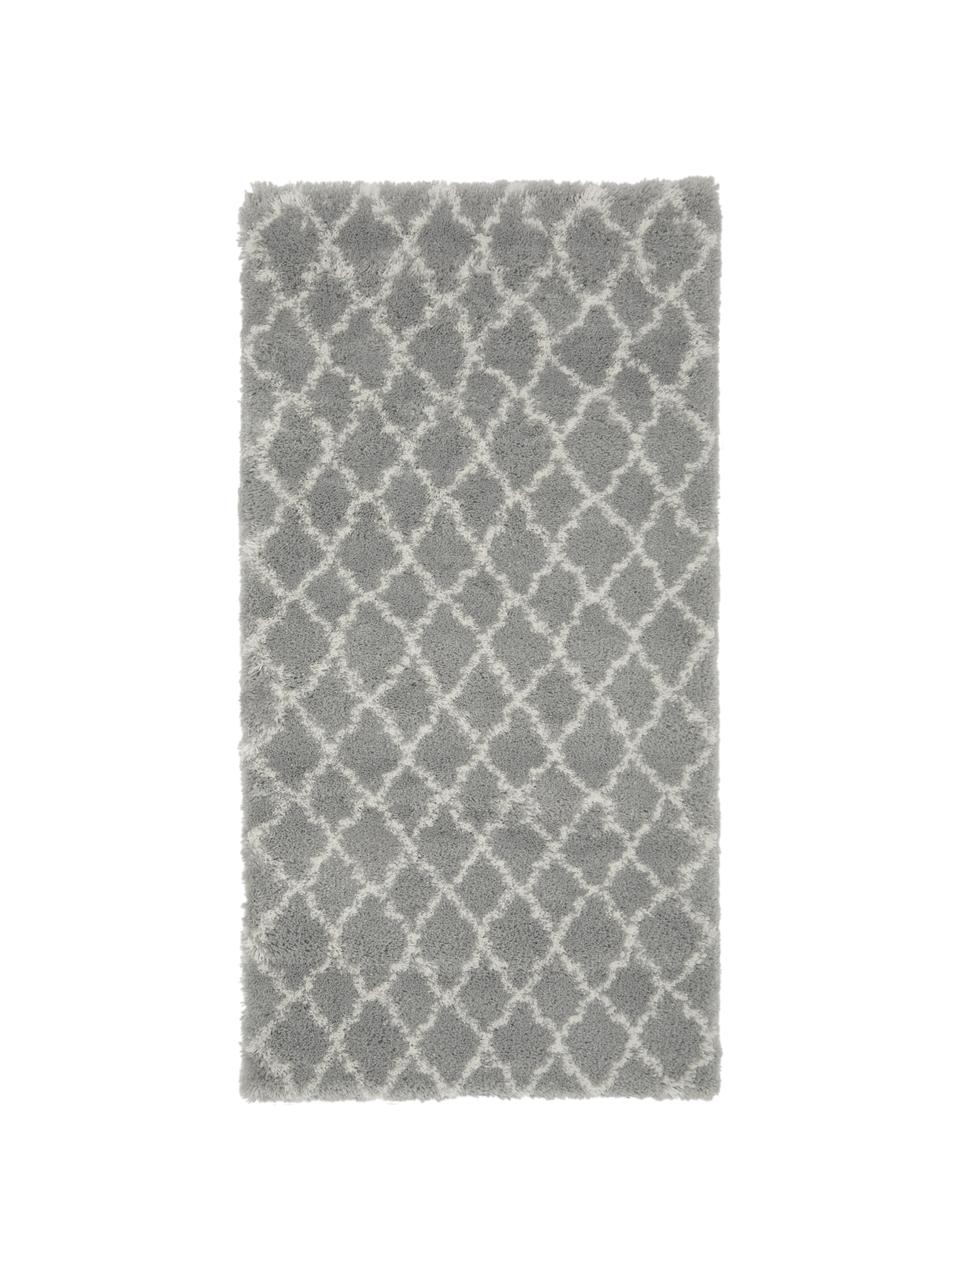 Hochflor-Teppich Mona in Grau/Creme, Flor: 100% Polypropylen, Grau, Cremeweiss, B 300 x L 400 cm (Grösse XL)